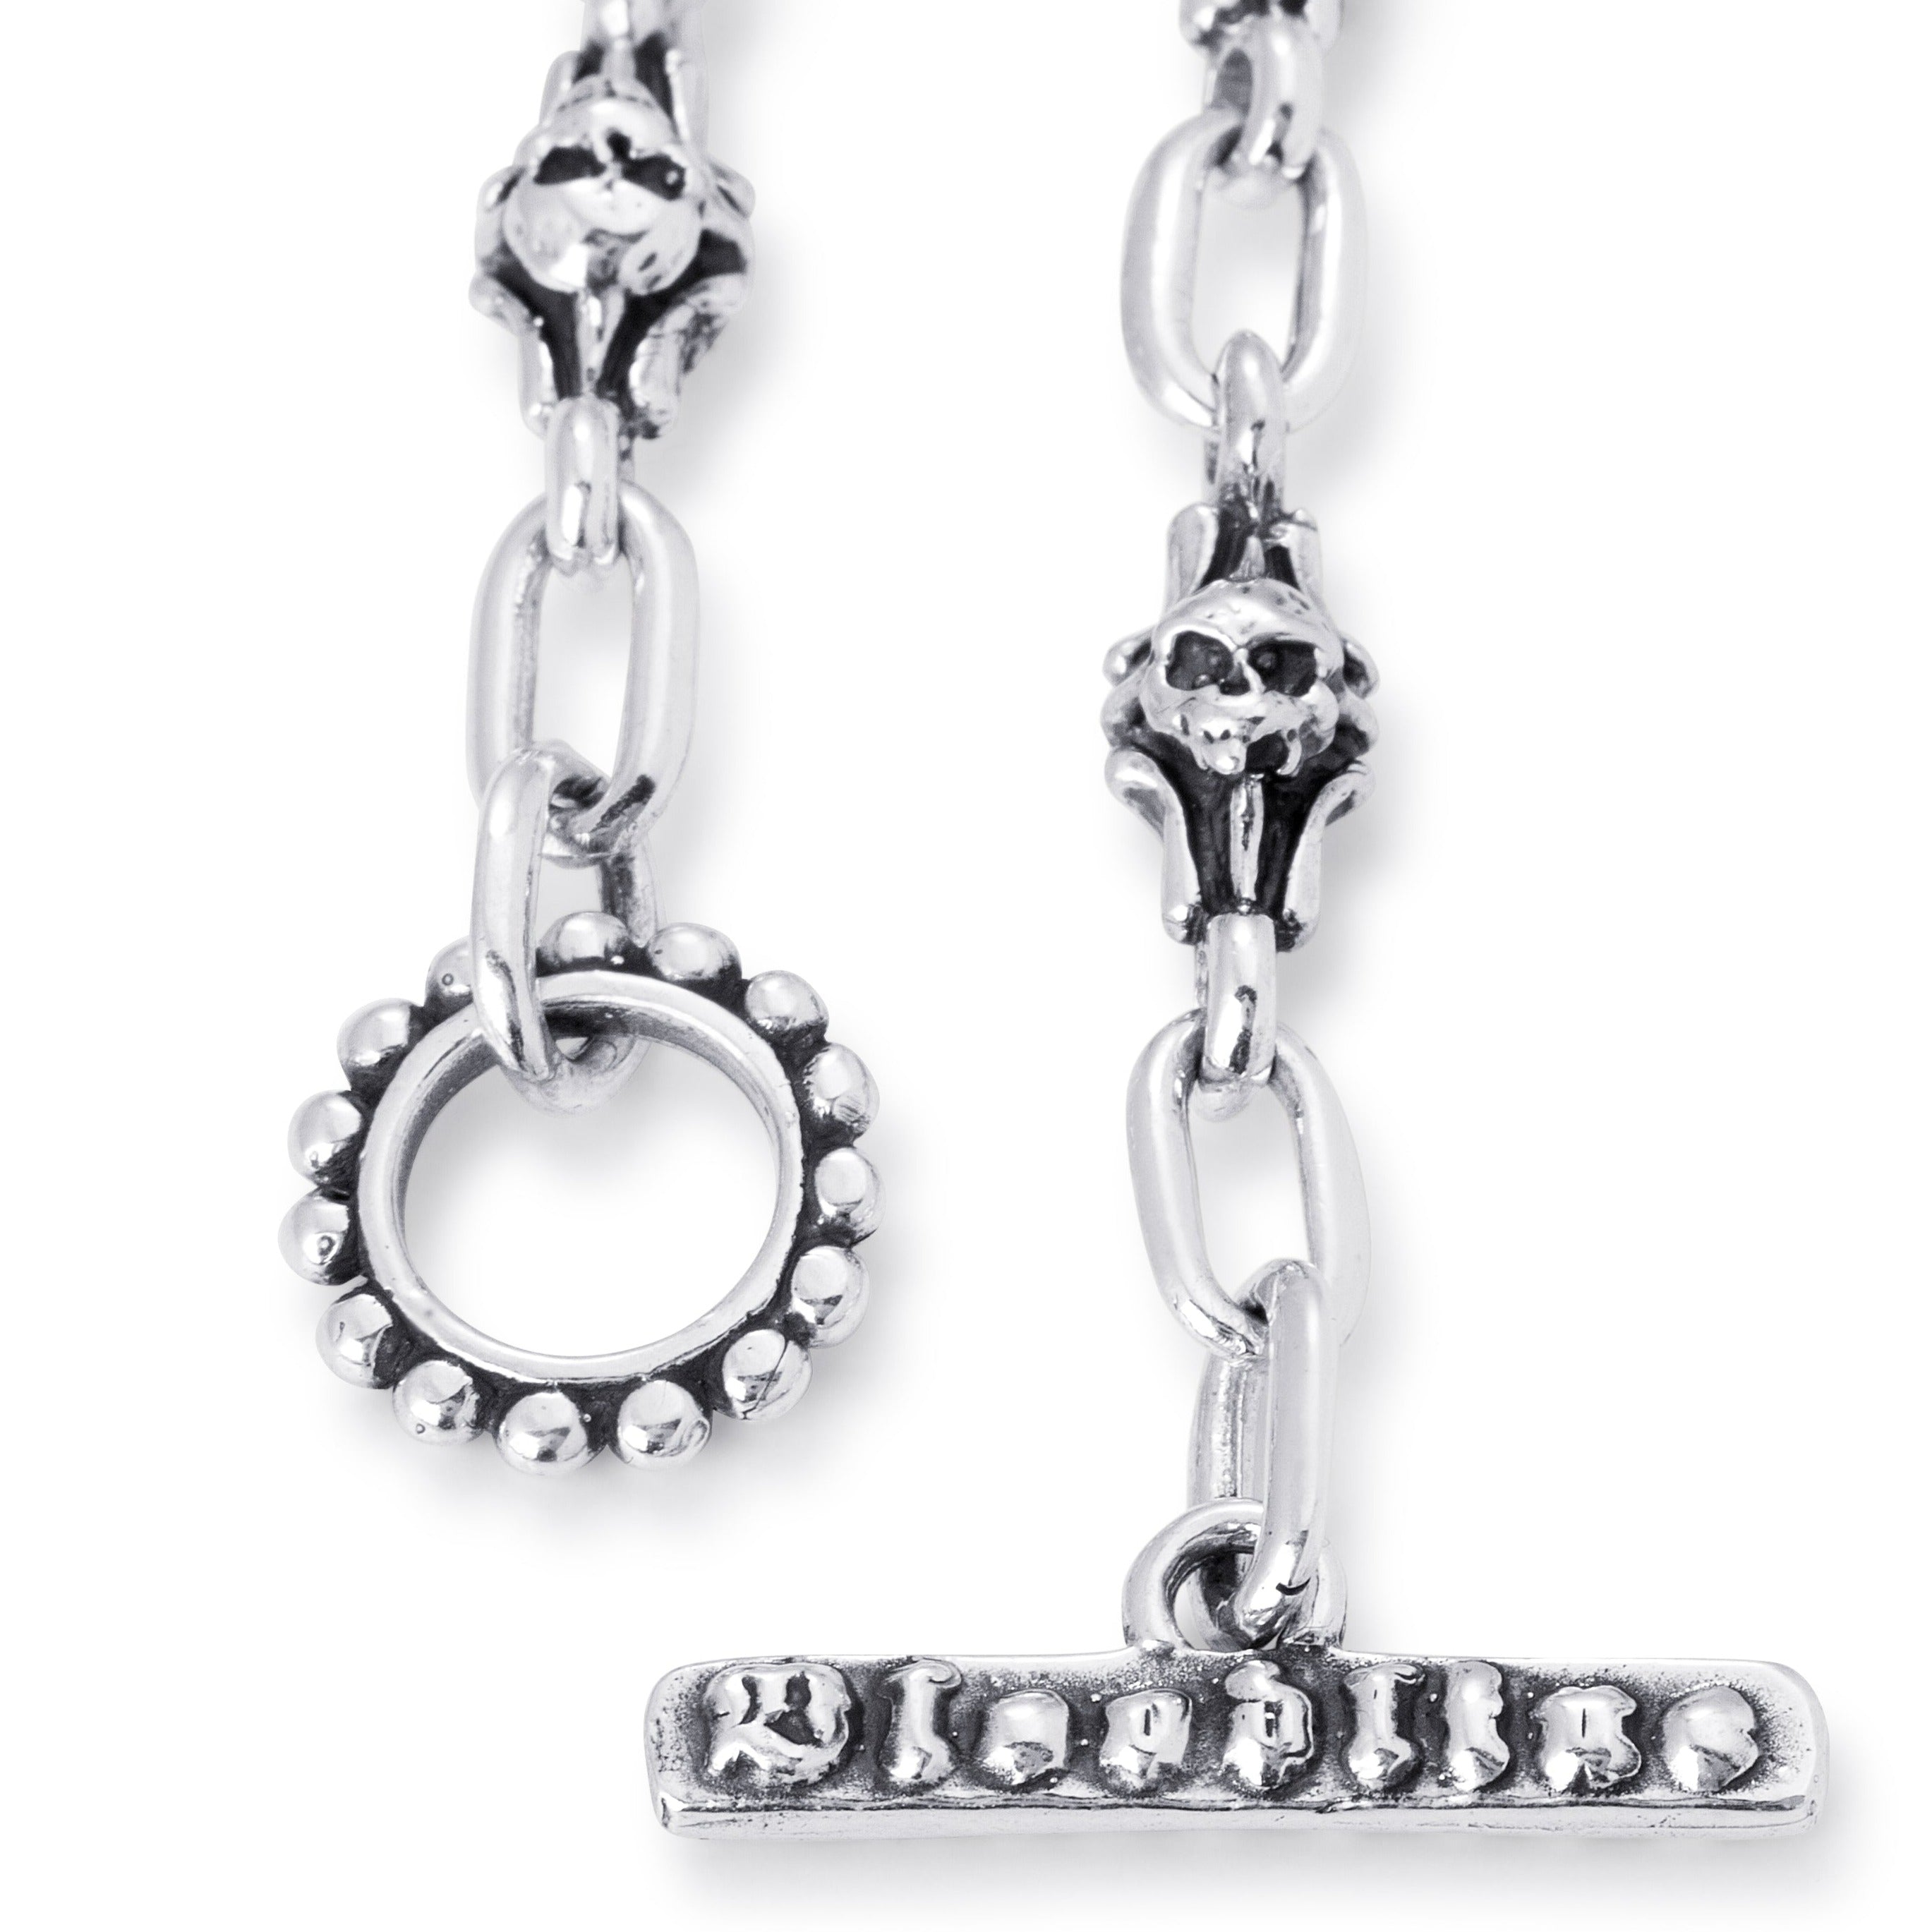 Barcelona Skull Chain Link Bracelet in Sterling Silver, 6mm